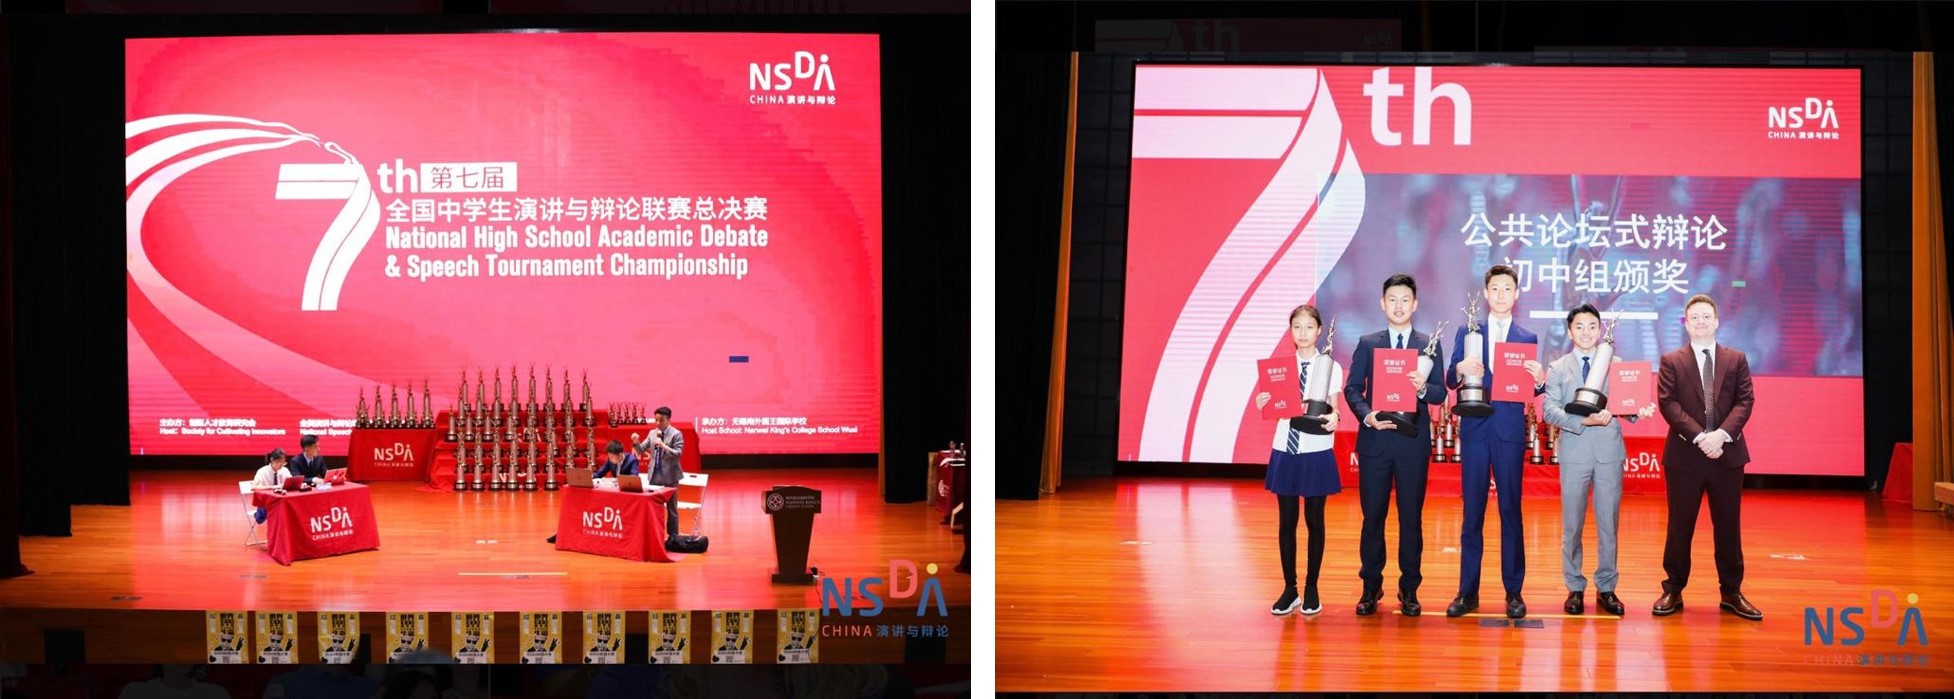 Guan Rong T and Jeffrey W at National Speech and Debate Association (NSDA) National Championships -- Awards